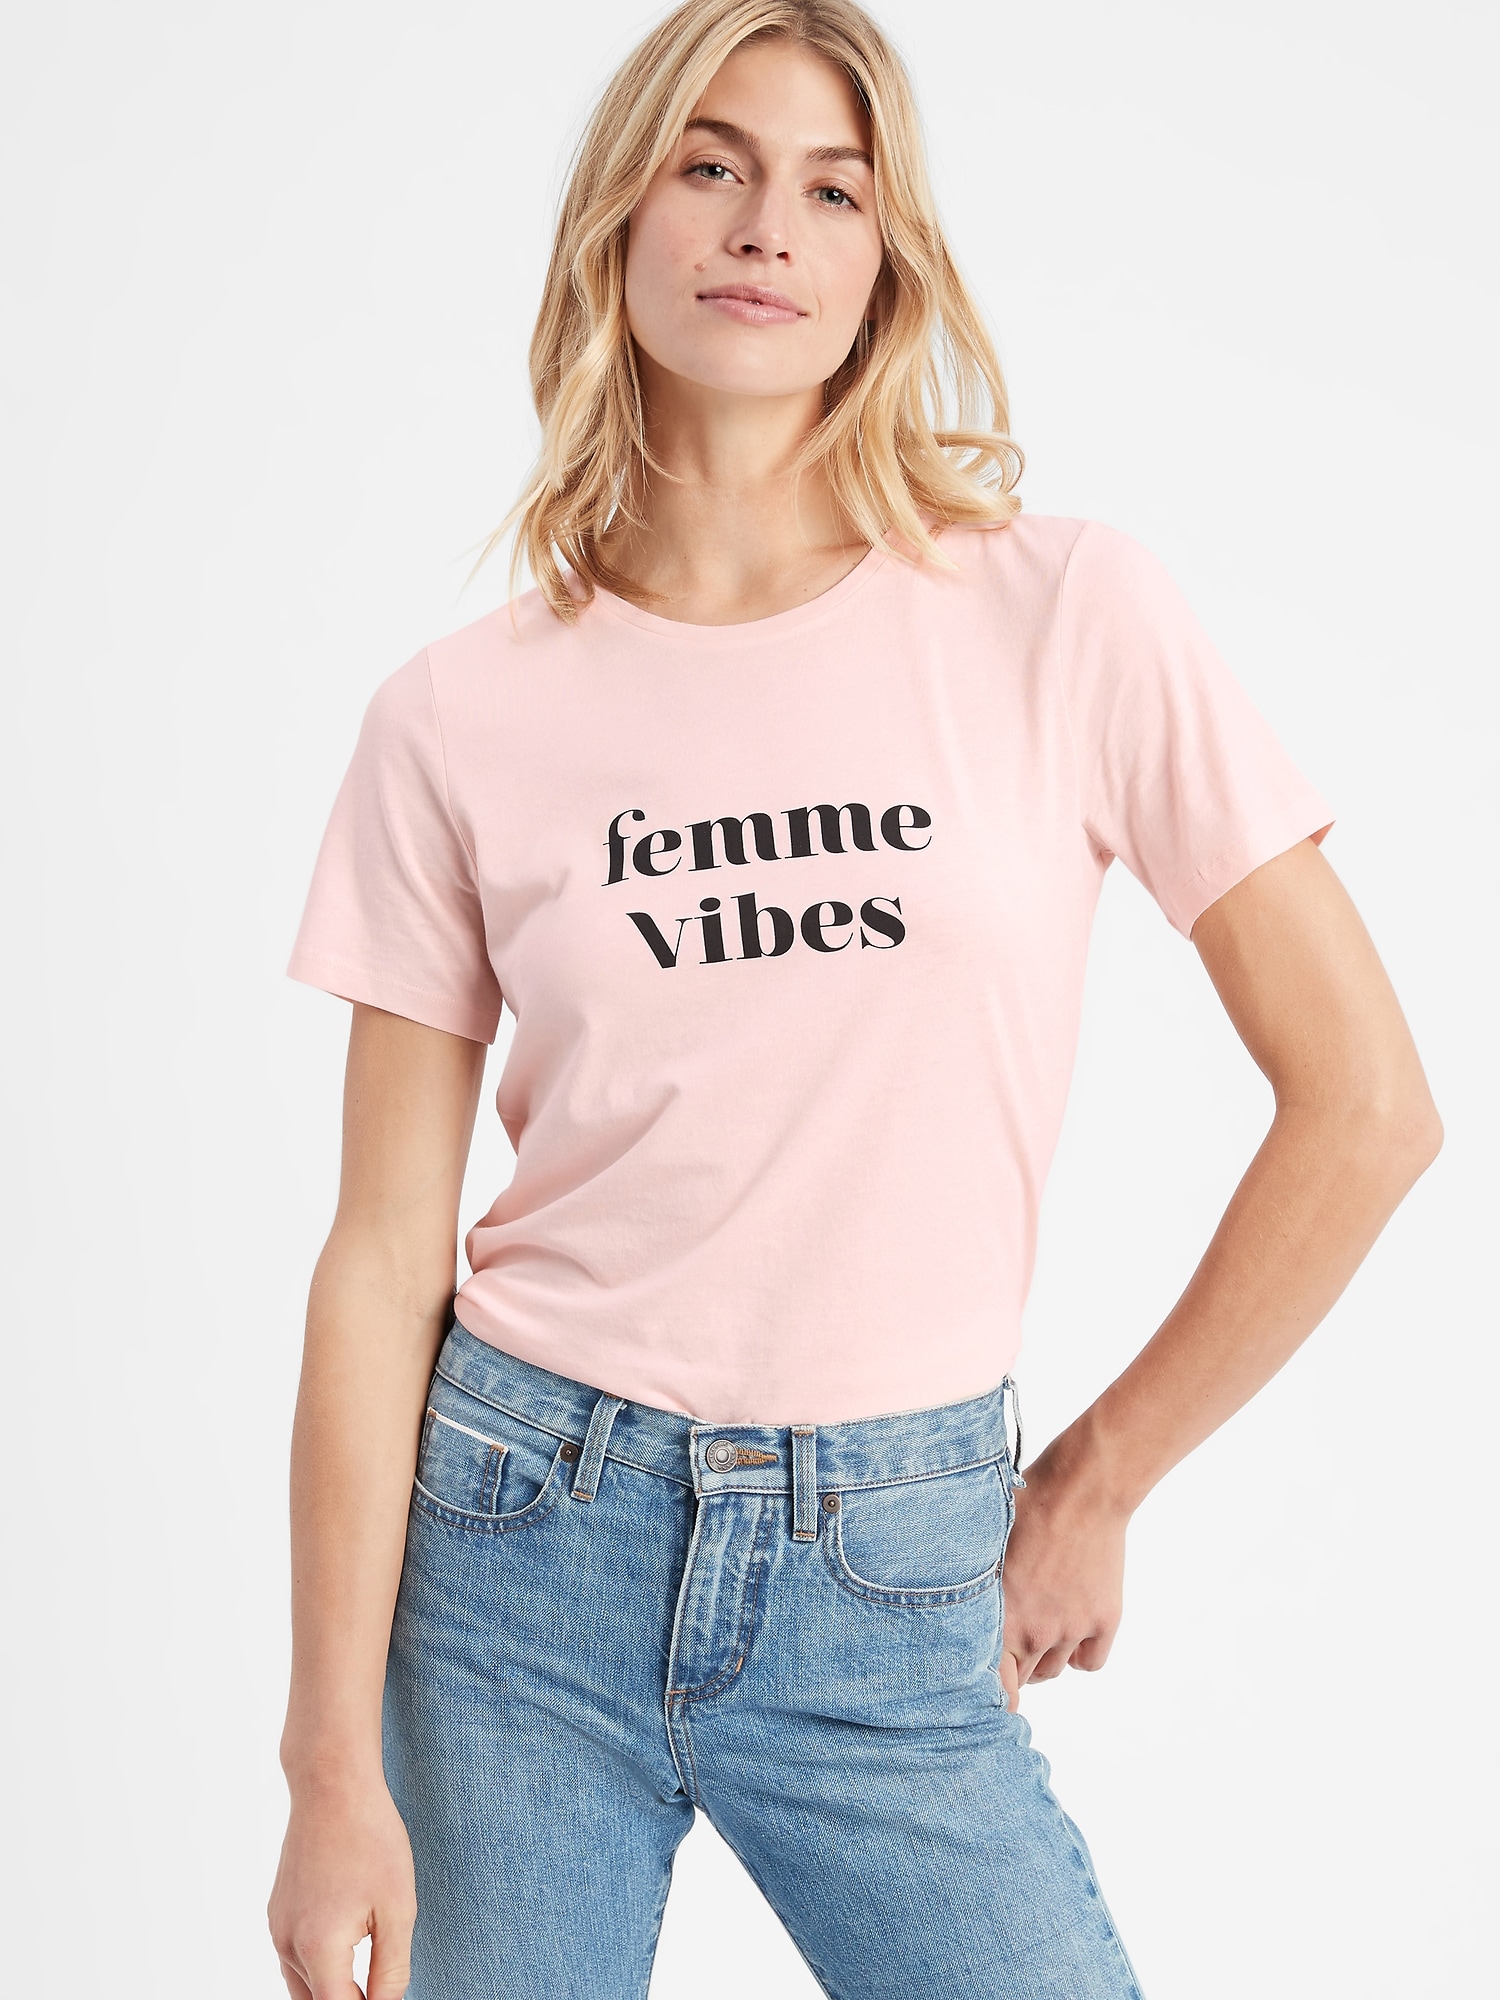 Women's Day Graphic T-Shirt